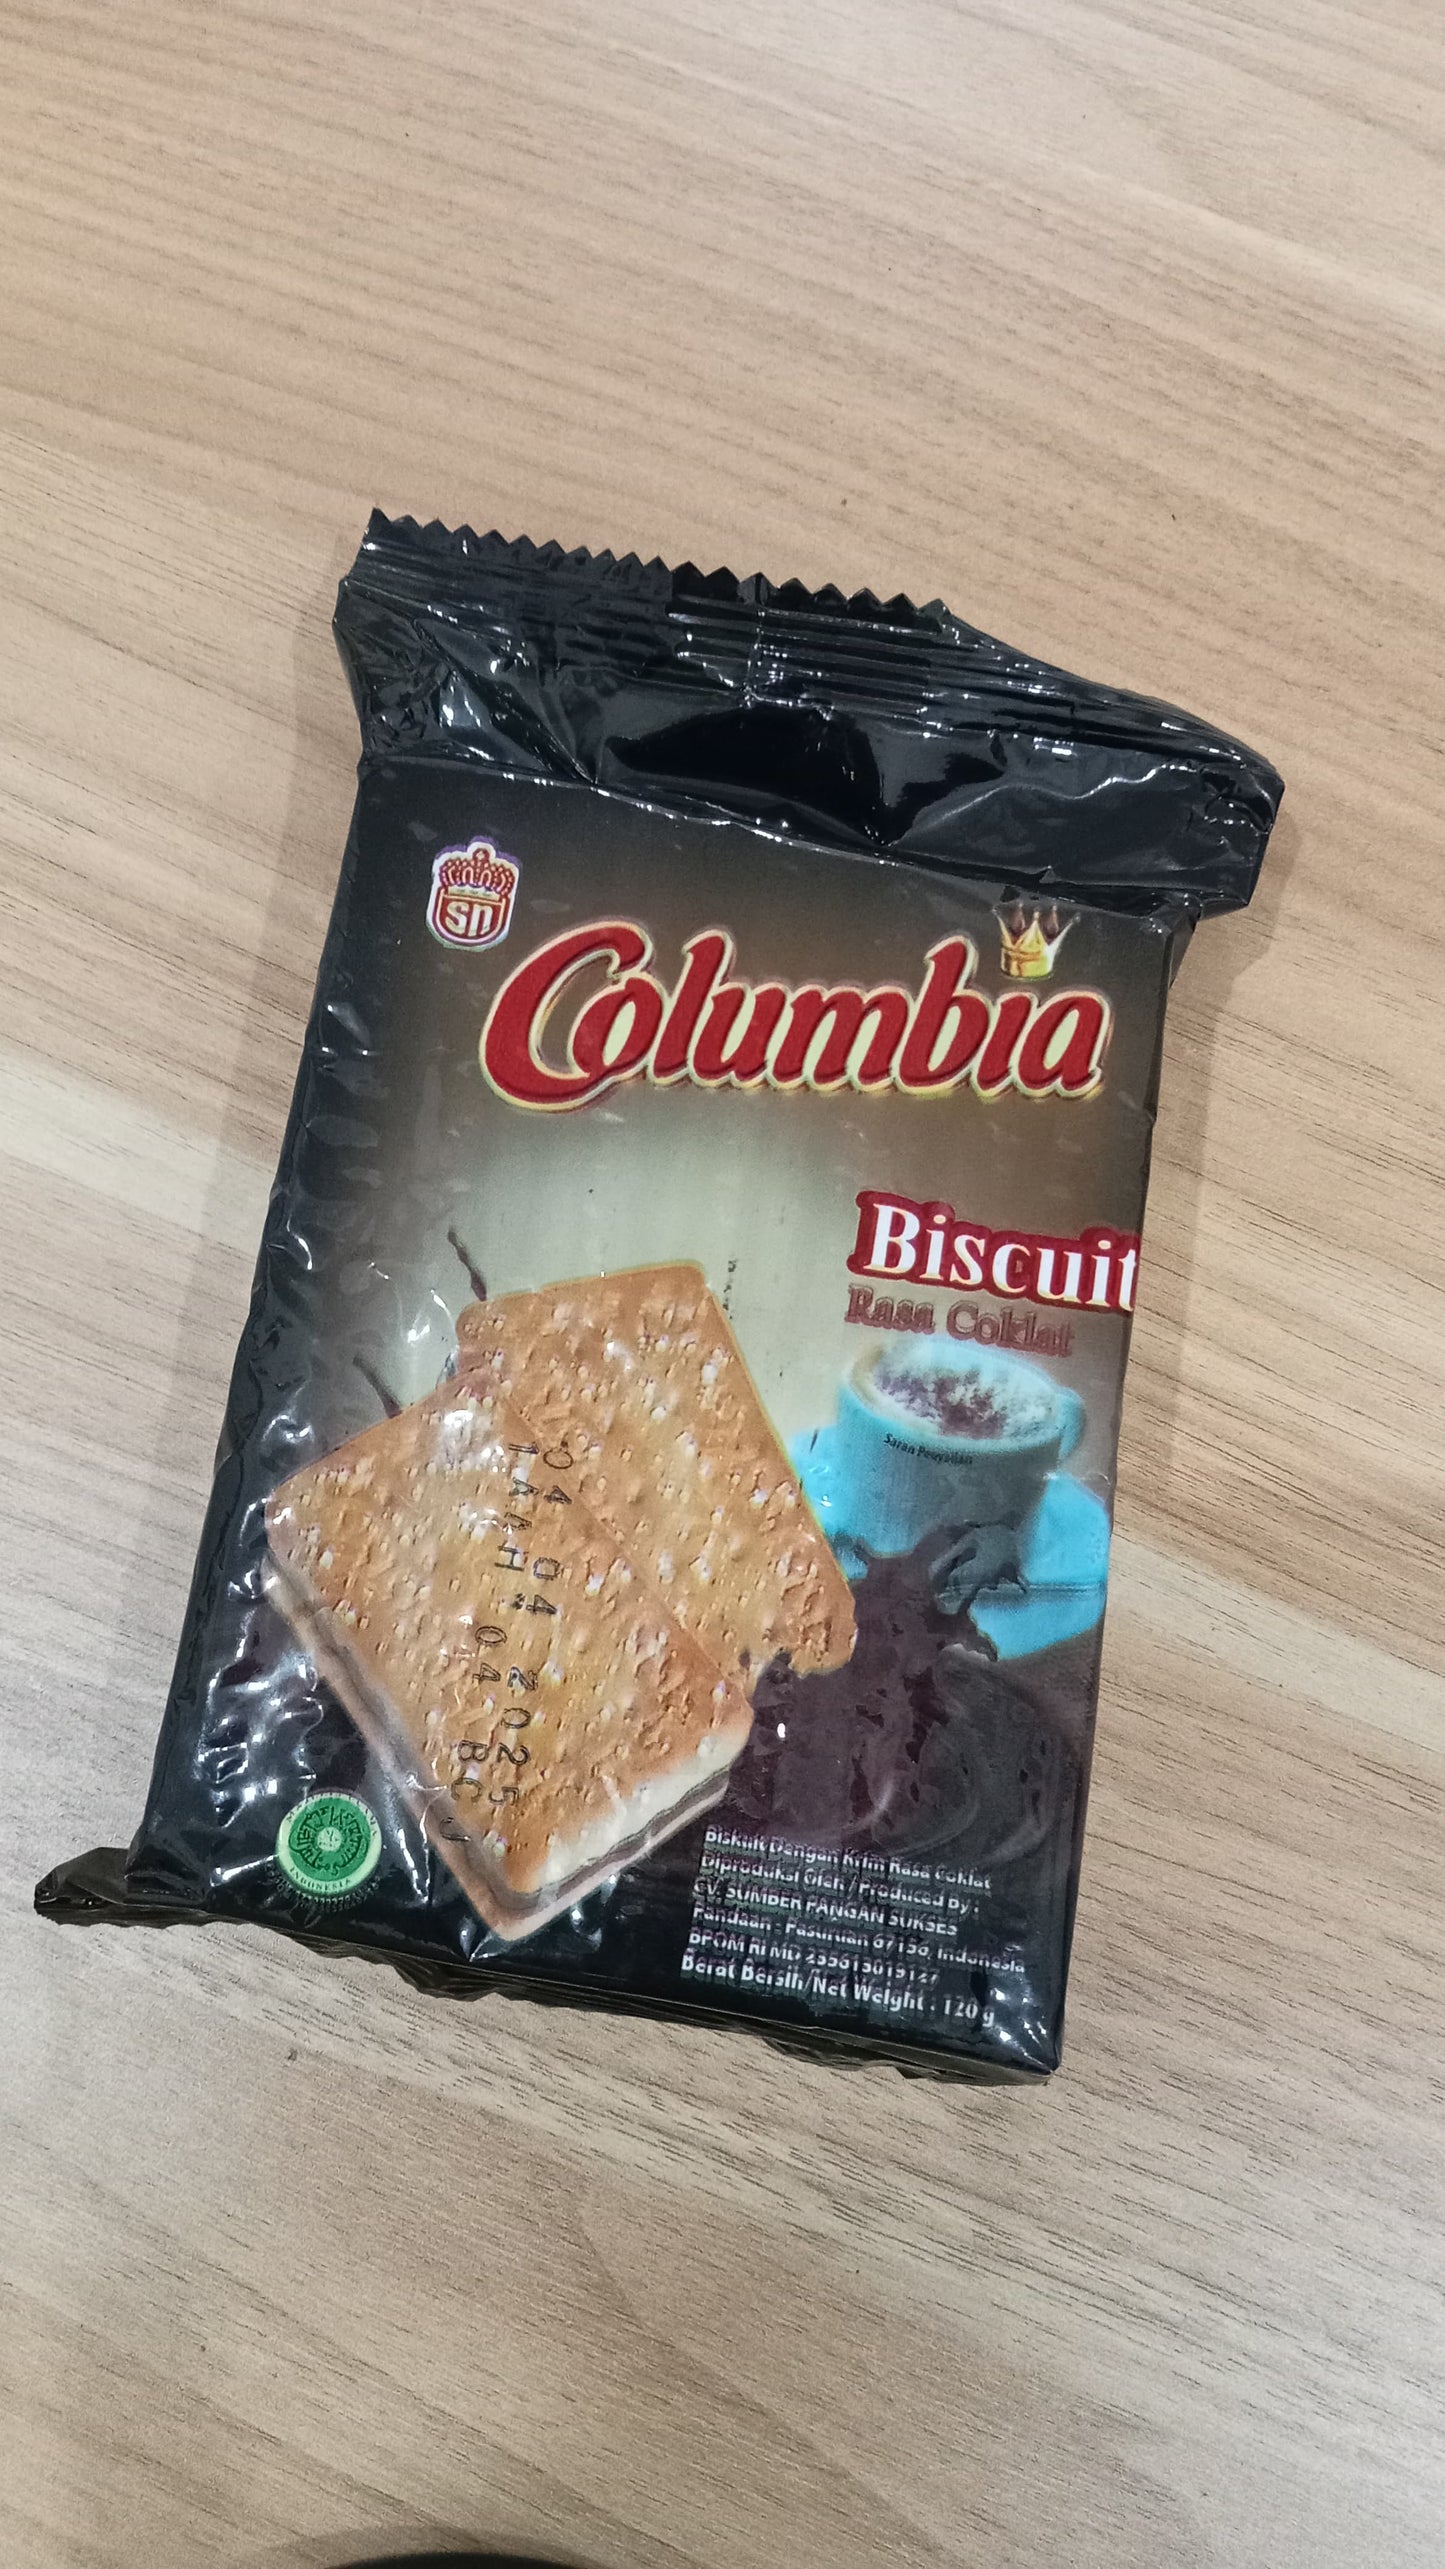 Biscuits Bon Bon Chocolate